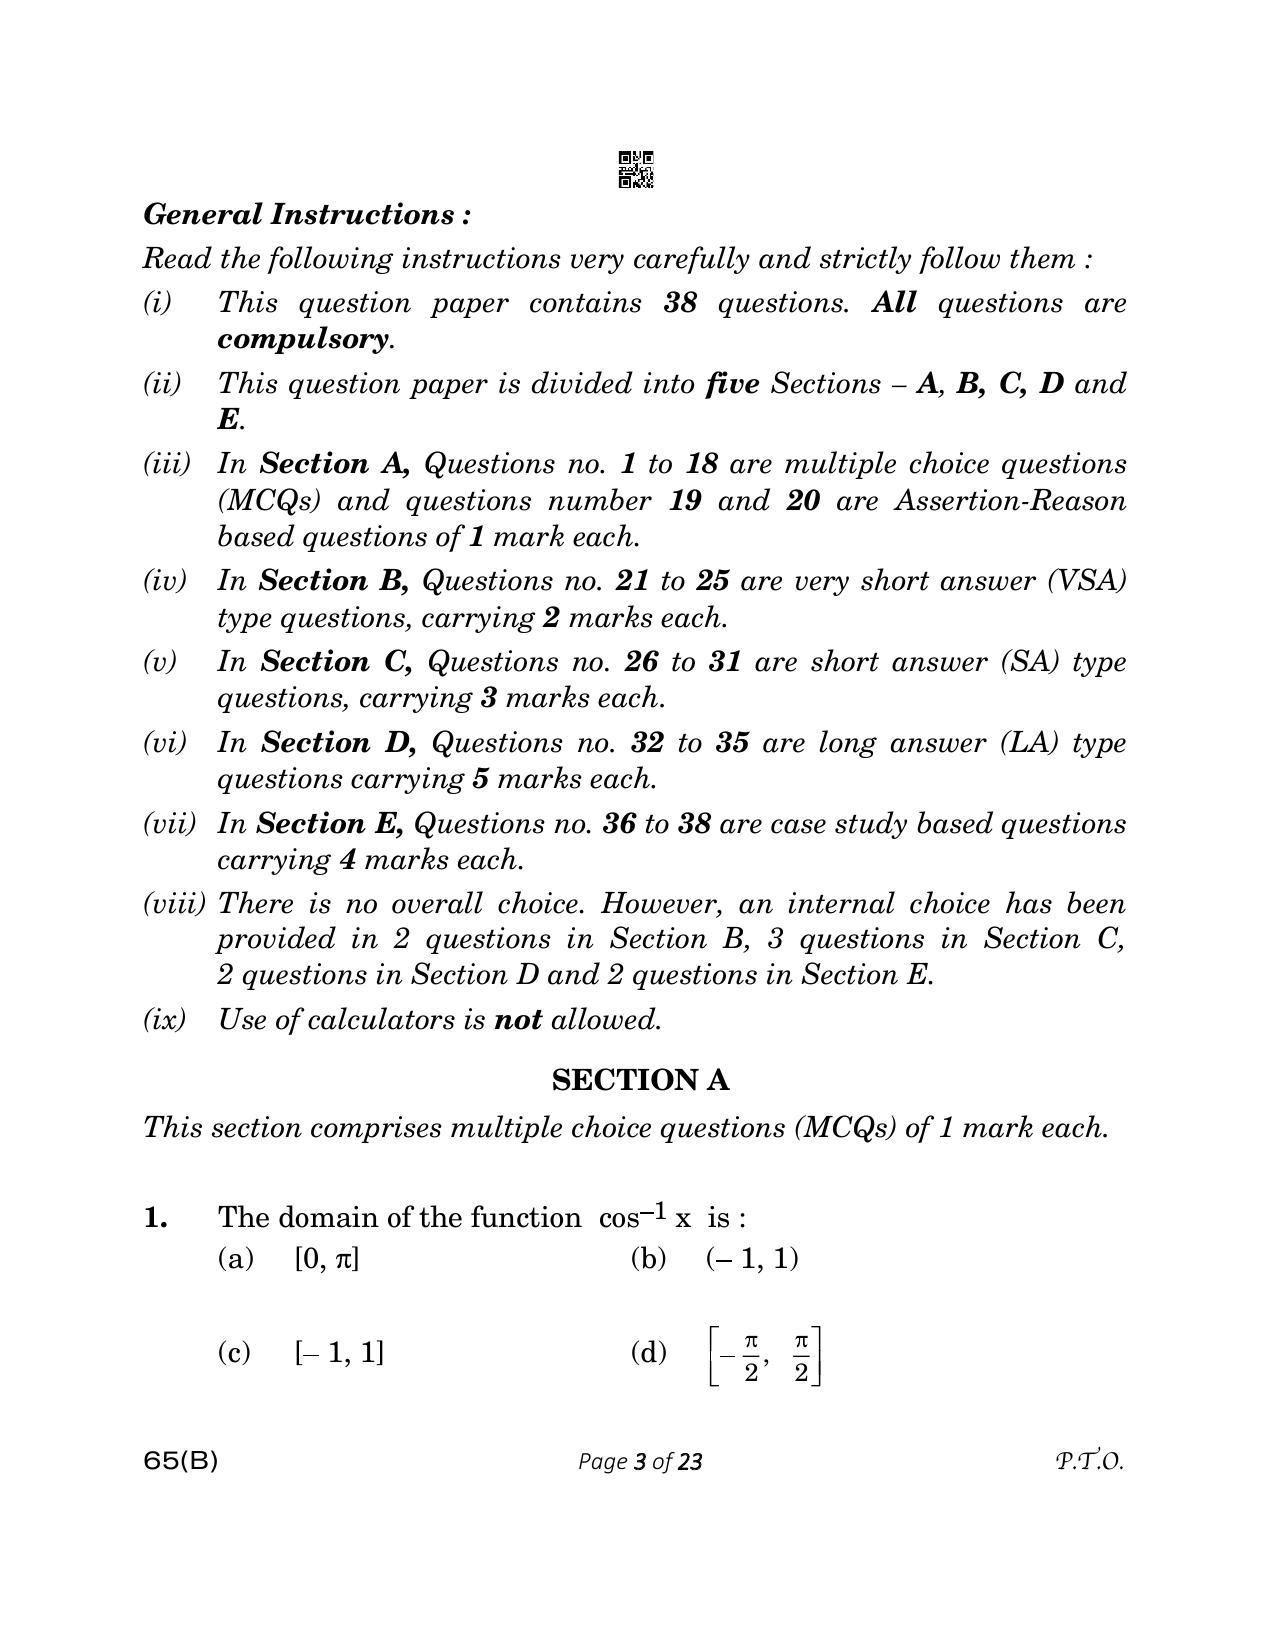 CBSE Class 12 65(B) MATHEMATICS FOR VI 2023 Question Paper - Page 3